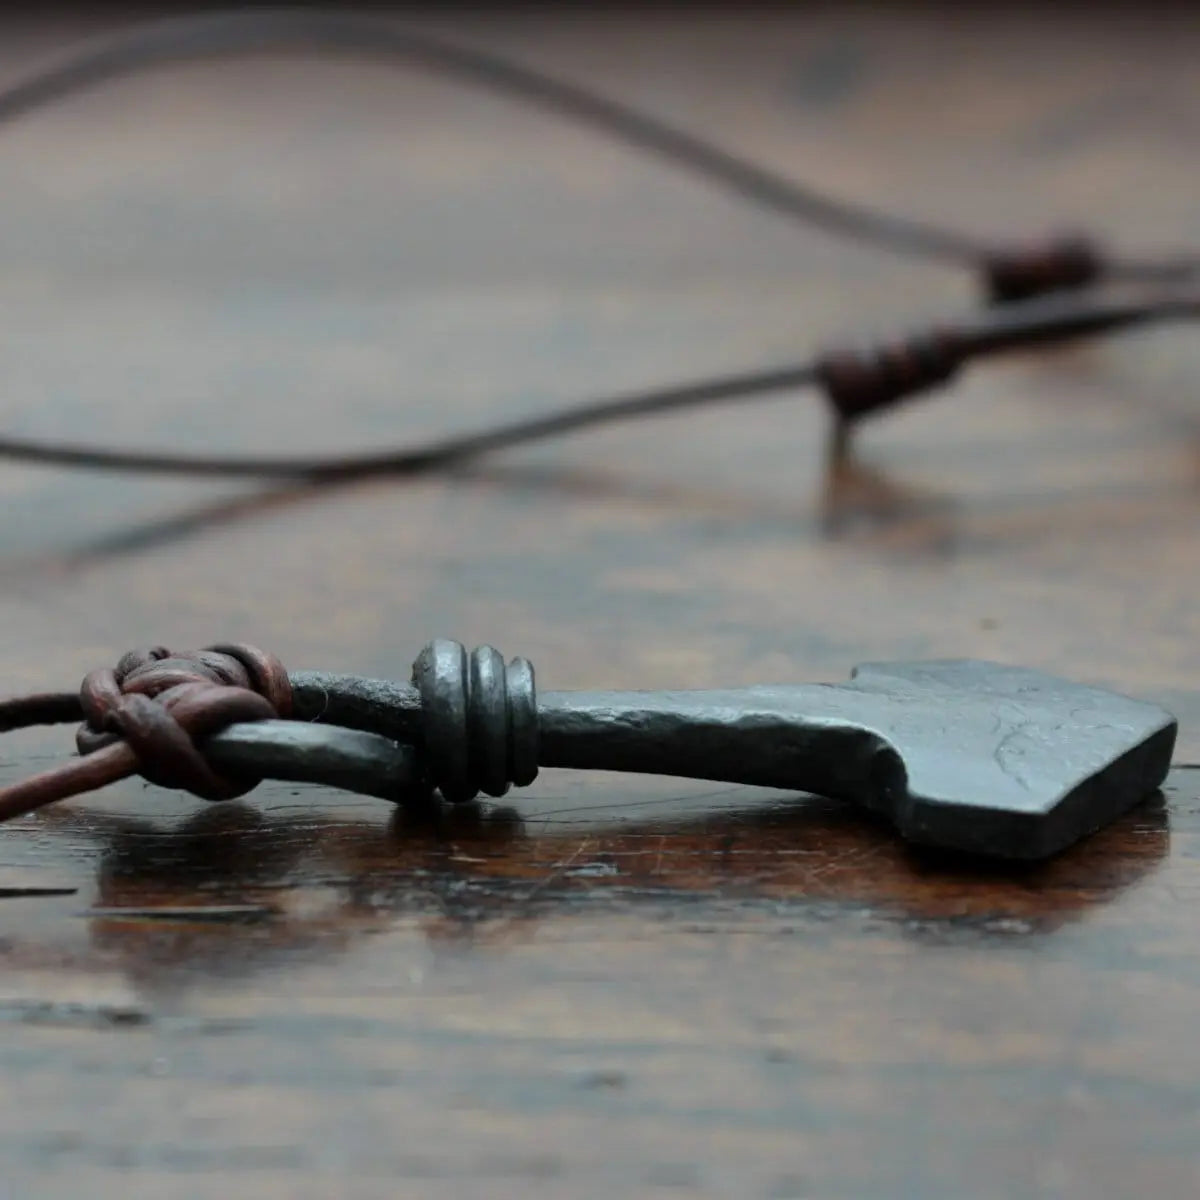 Large Iron Mjölnir pendant